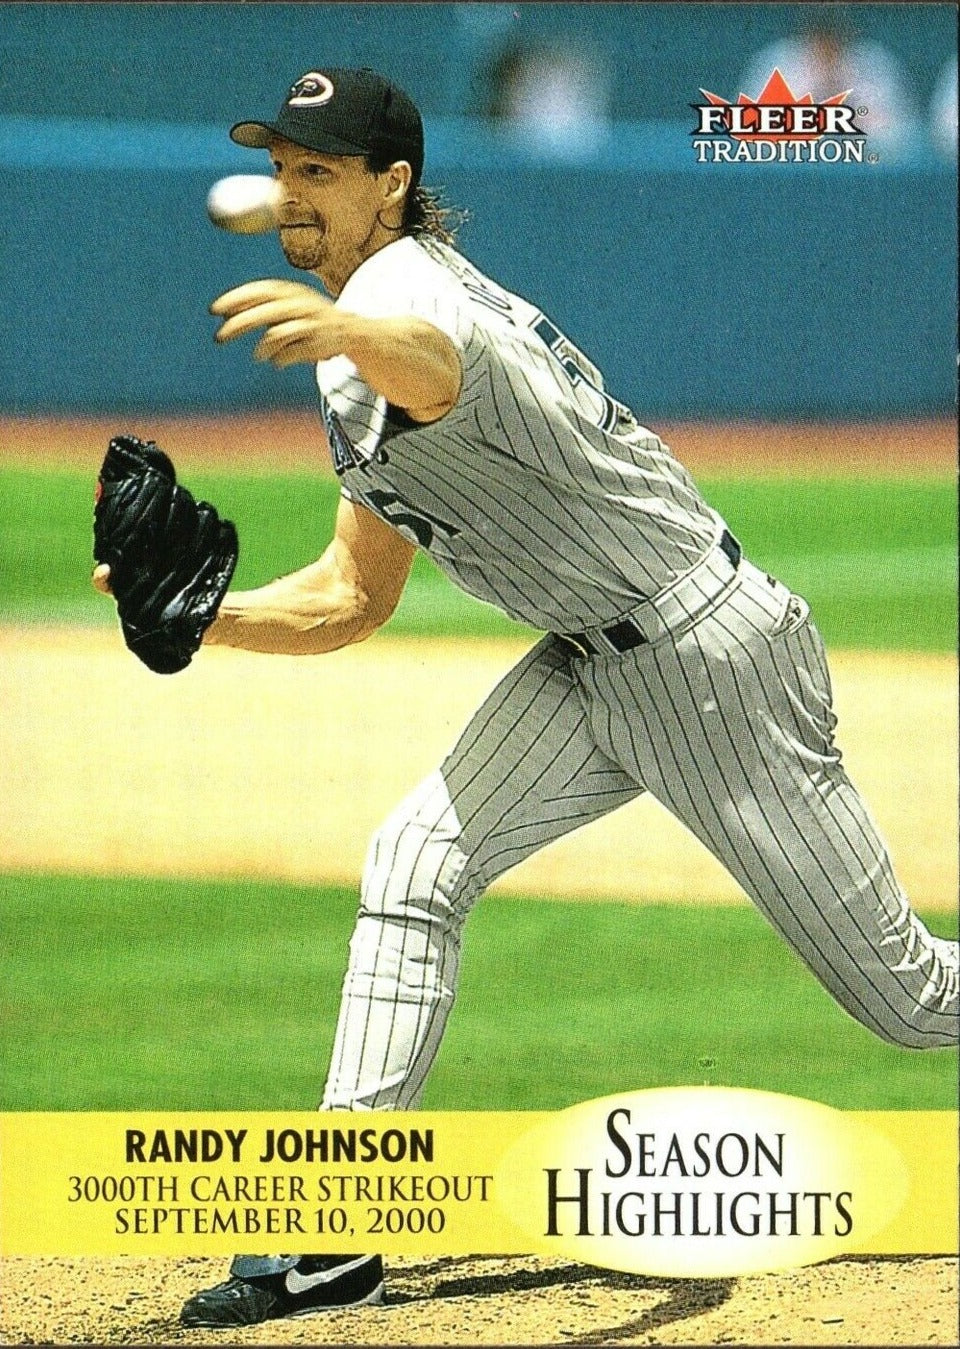 Randy Johnson Highlights 